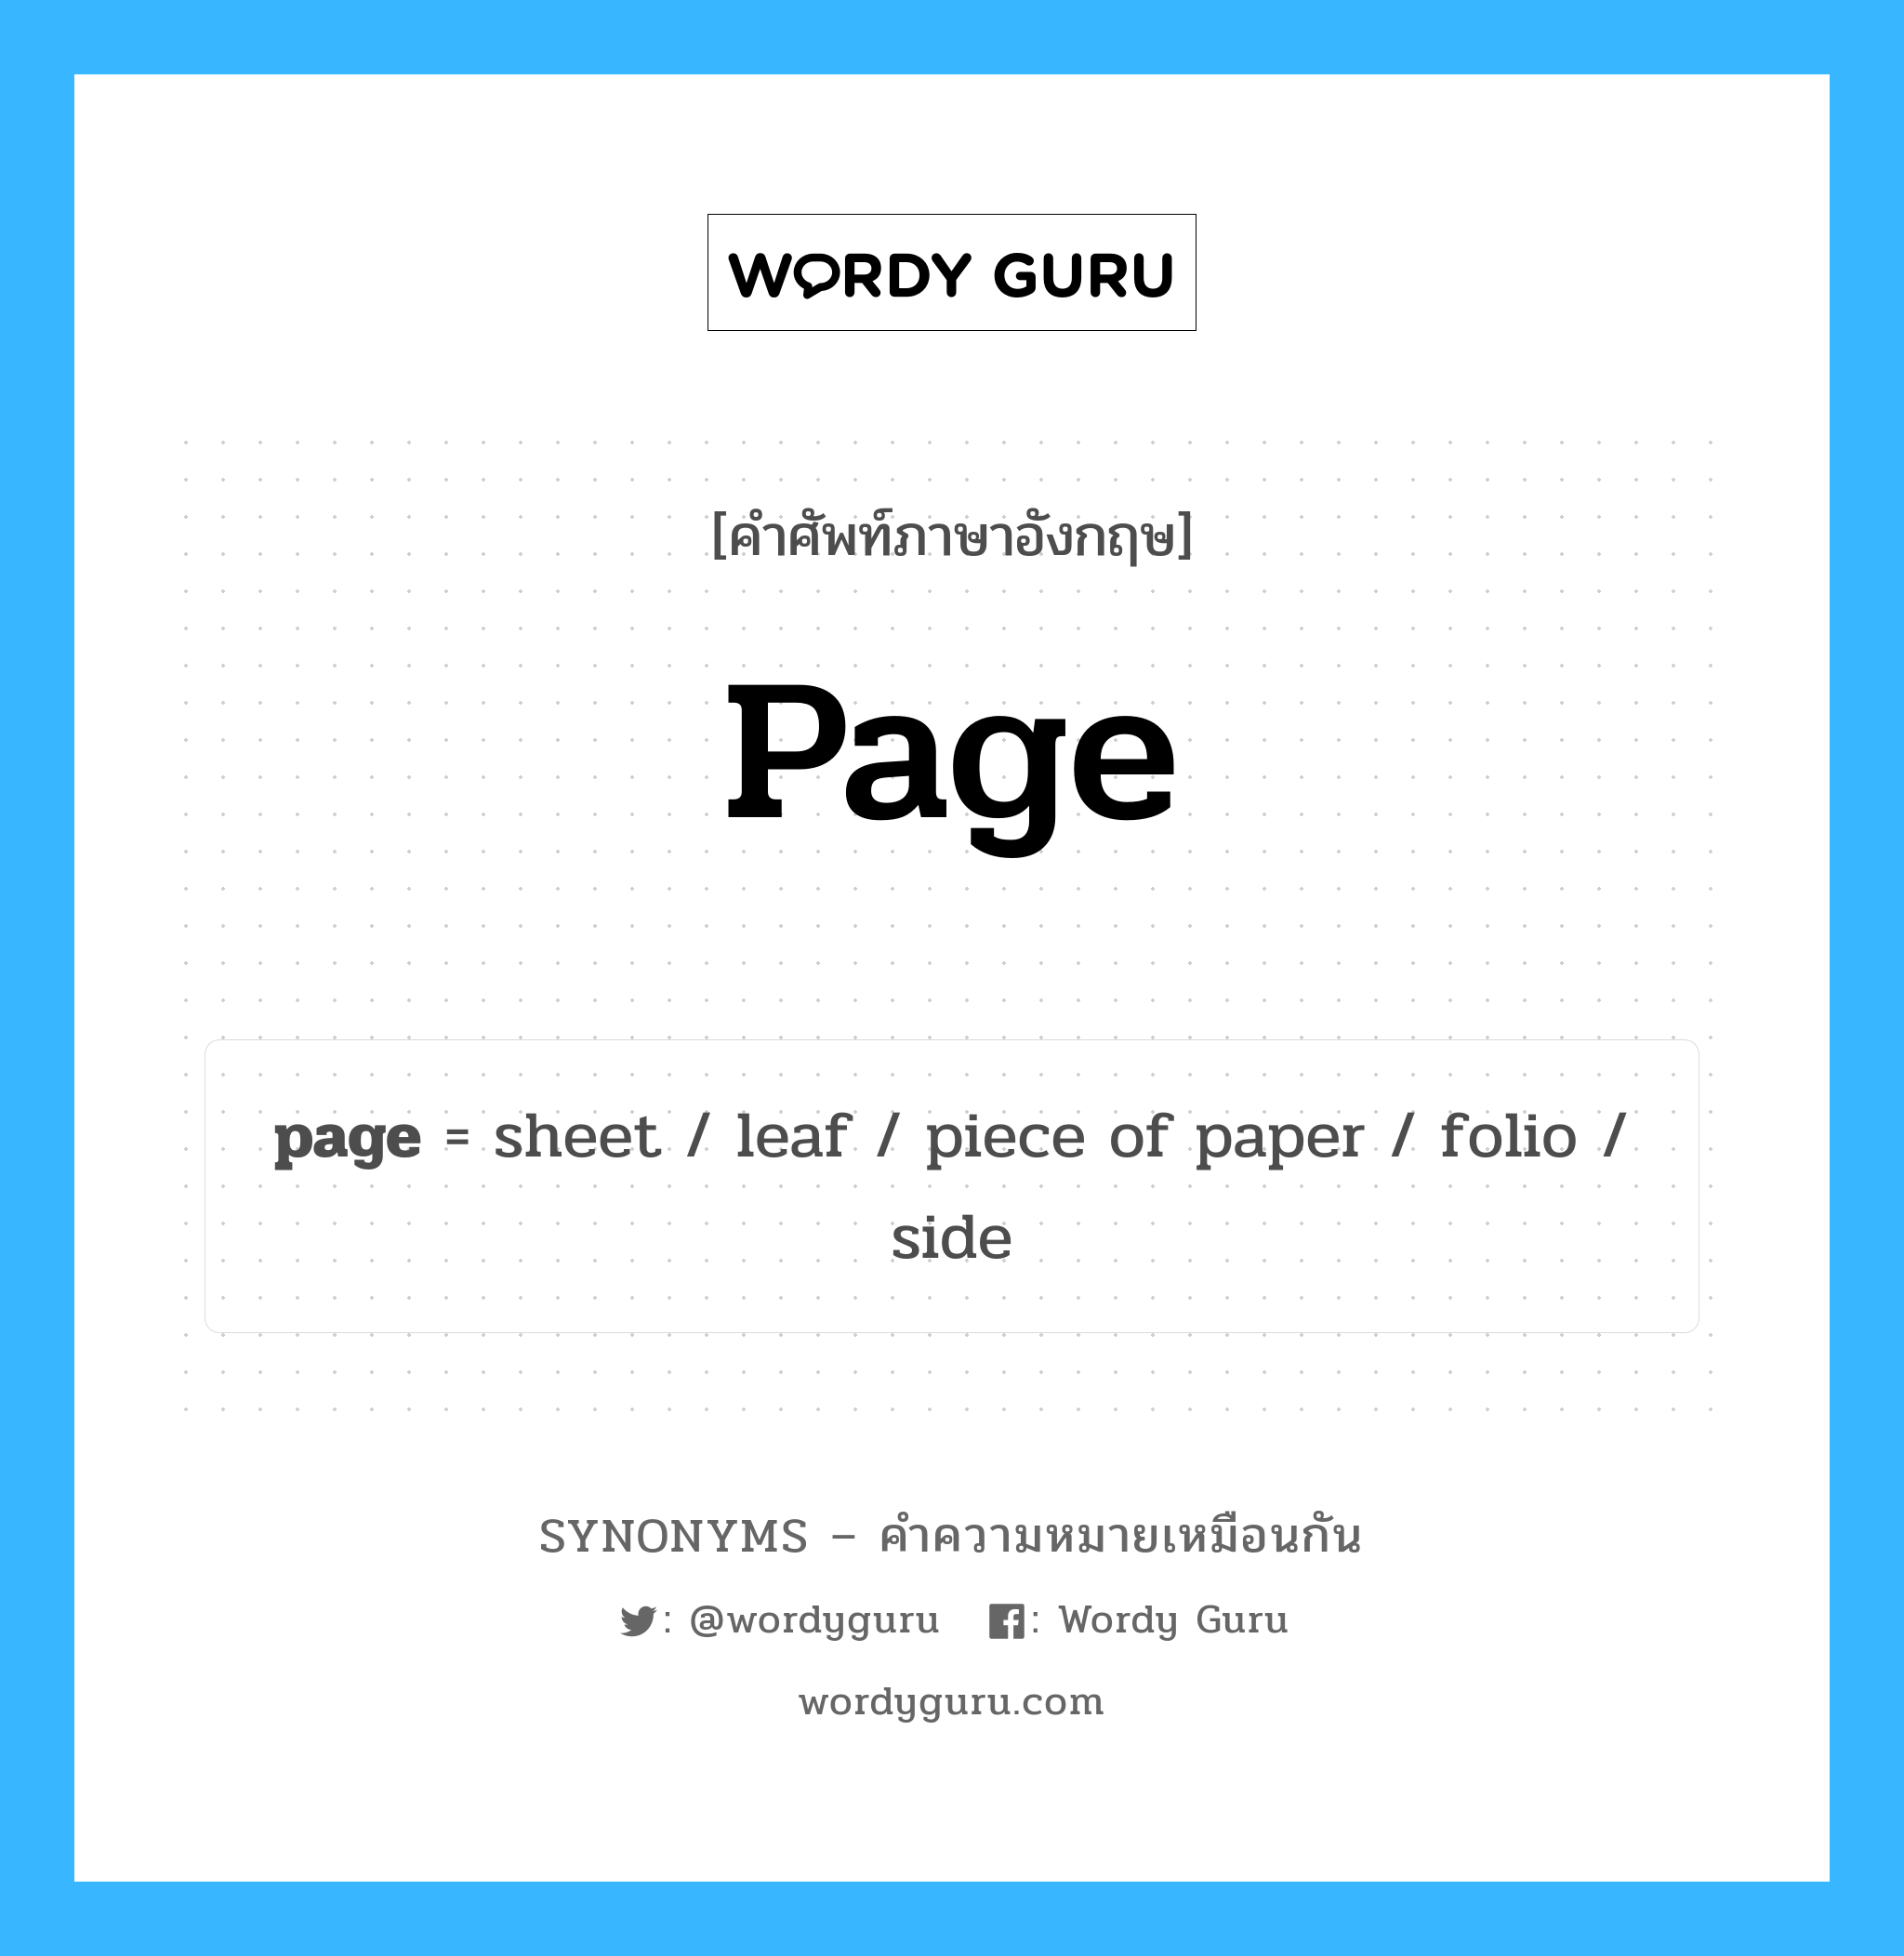 sheet เป็นหนึ่งใน page และมีคำอื่น ๆ อีกดังนี้, คำศัพท์ภาษาอังกฤษ sheet ความหมายคล้ายกันกับ page แปลว่า แผ่น หมวด page